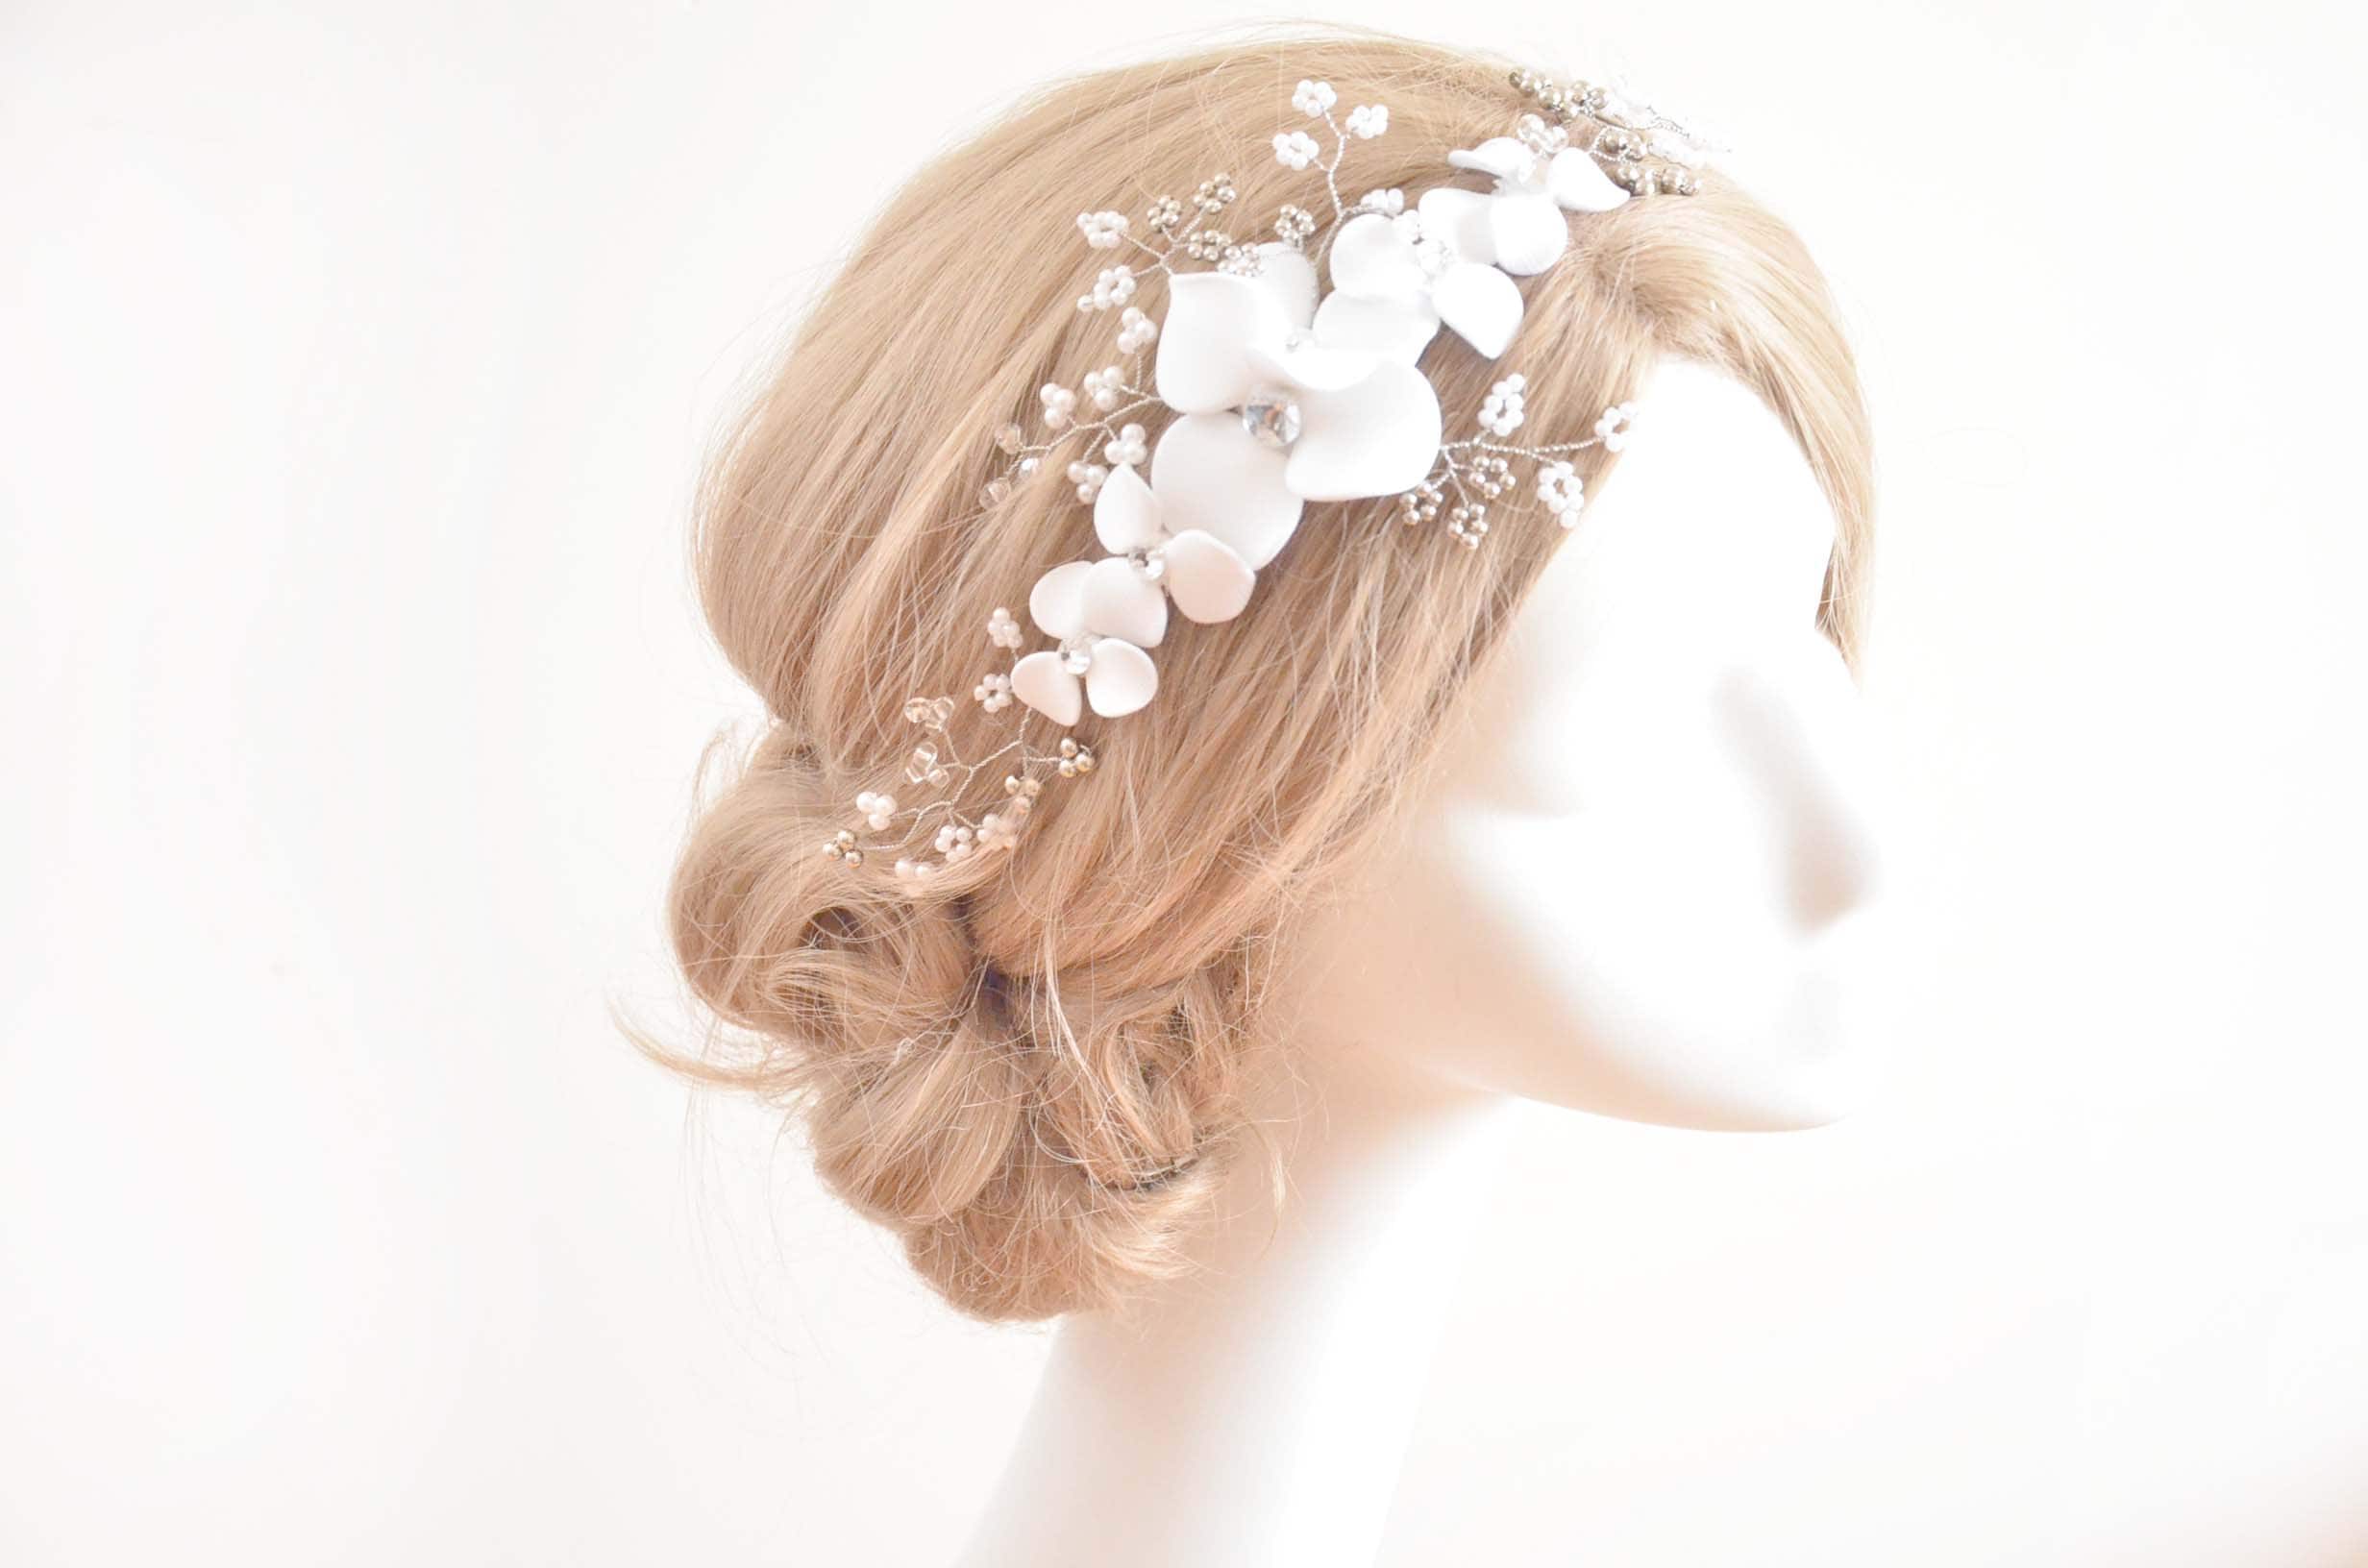 Decorative headband Floral headpiece White headband Bridal headband Headband Bridesmaids bride First Communion headband